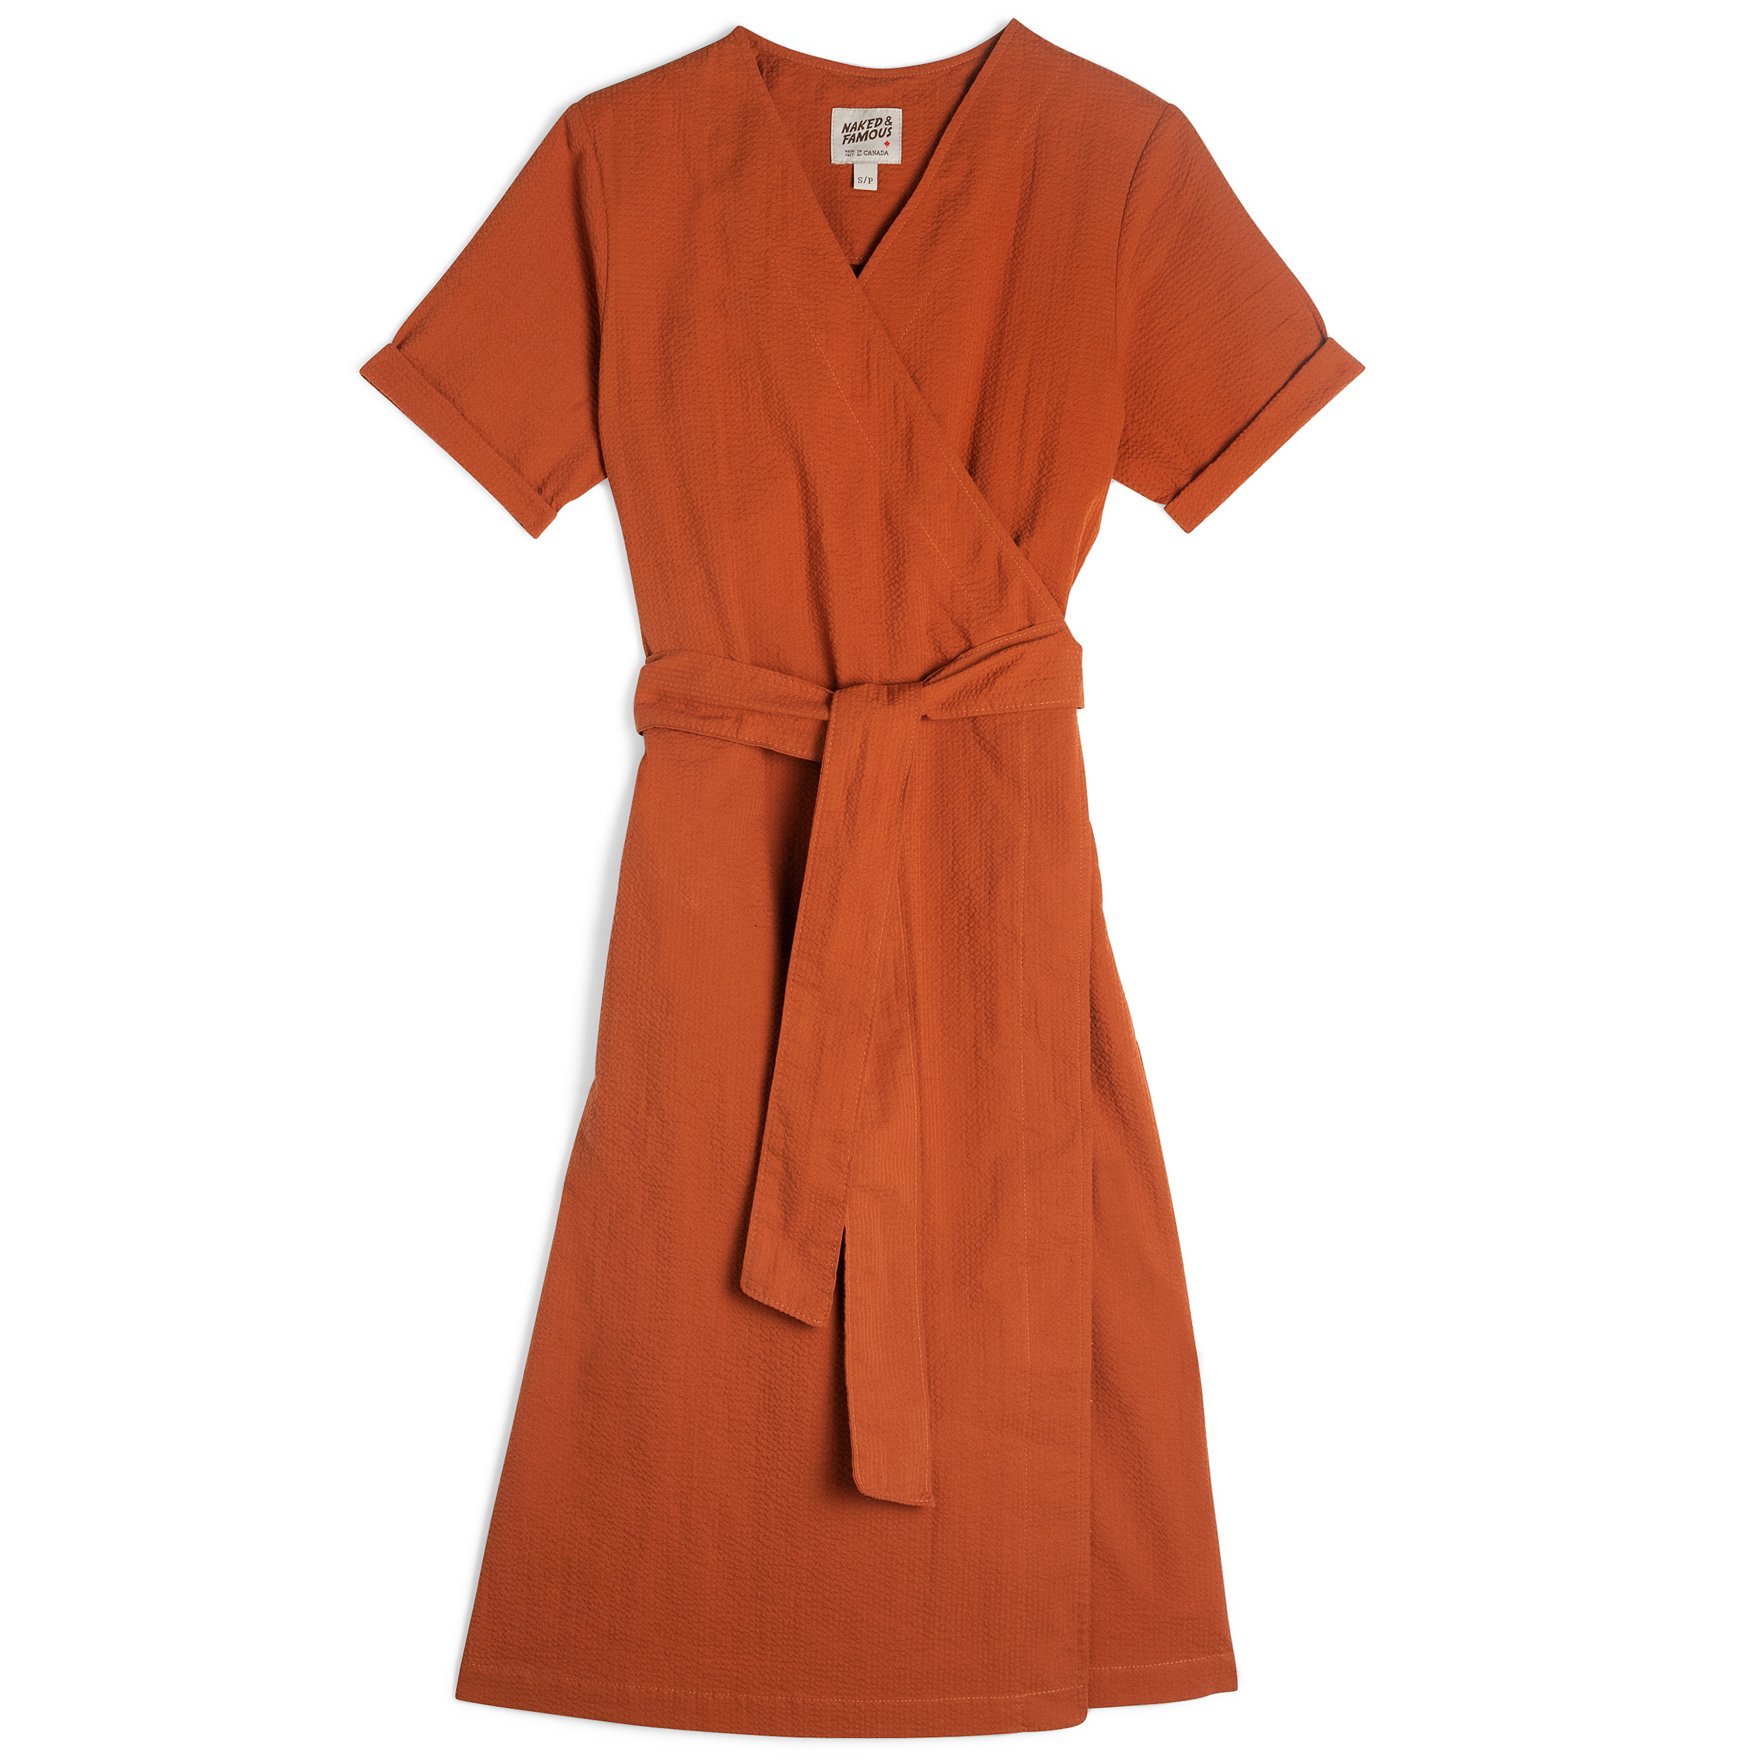 Naked Wardrobe, Long Wrap Dress, Blaser, Small, Burnt Orange, New w/Tags